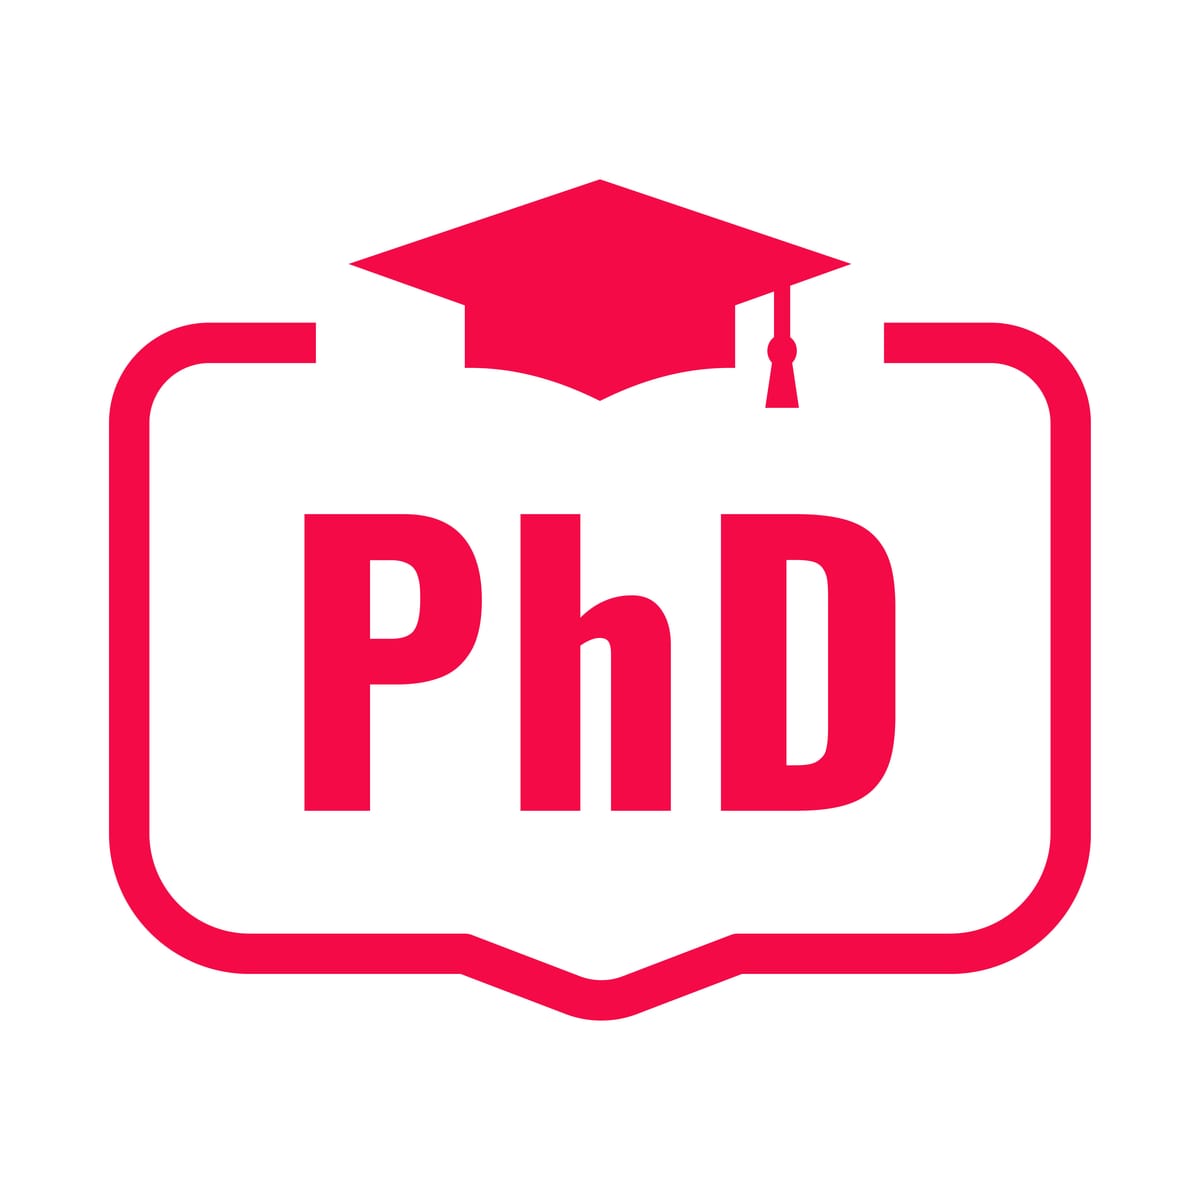 Phd degree online